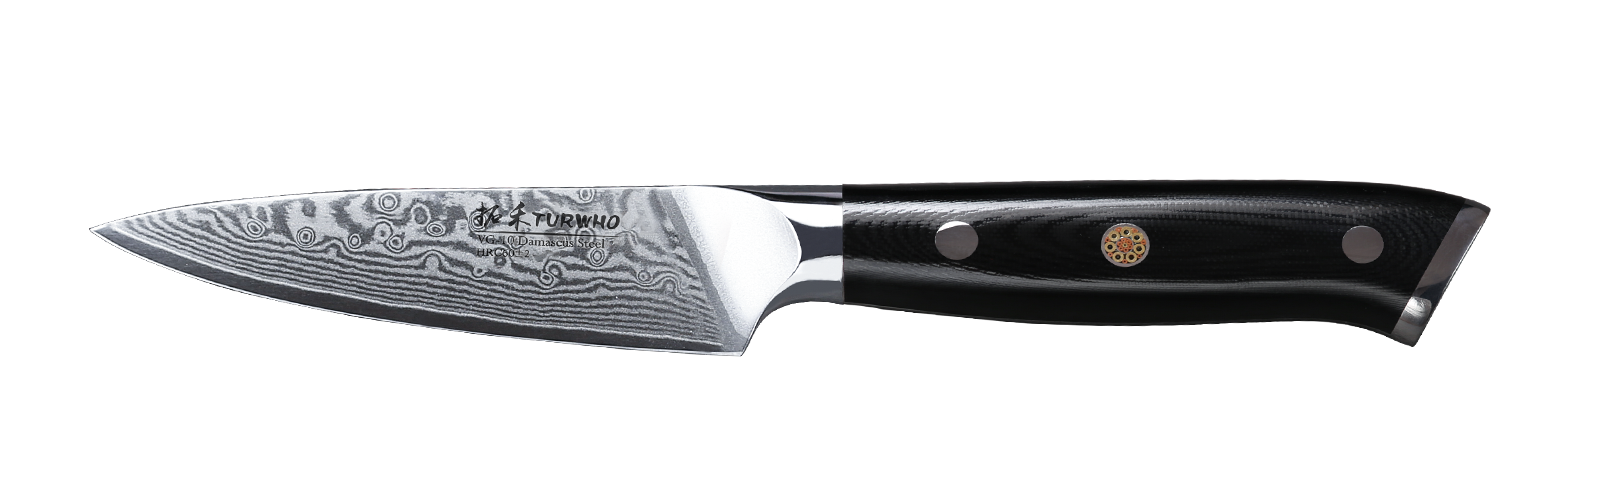 https://wholesalechefknife.com/wp-content/uploads/2020/04/OEM-3.5-inch-Peeling-Knife-Fruit-and-vegetable-Knife-Ultra-Sharp-Kitchen-Knife.png